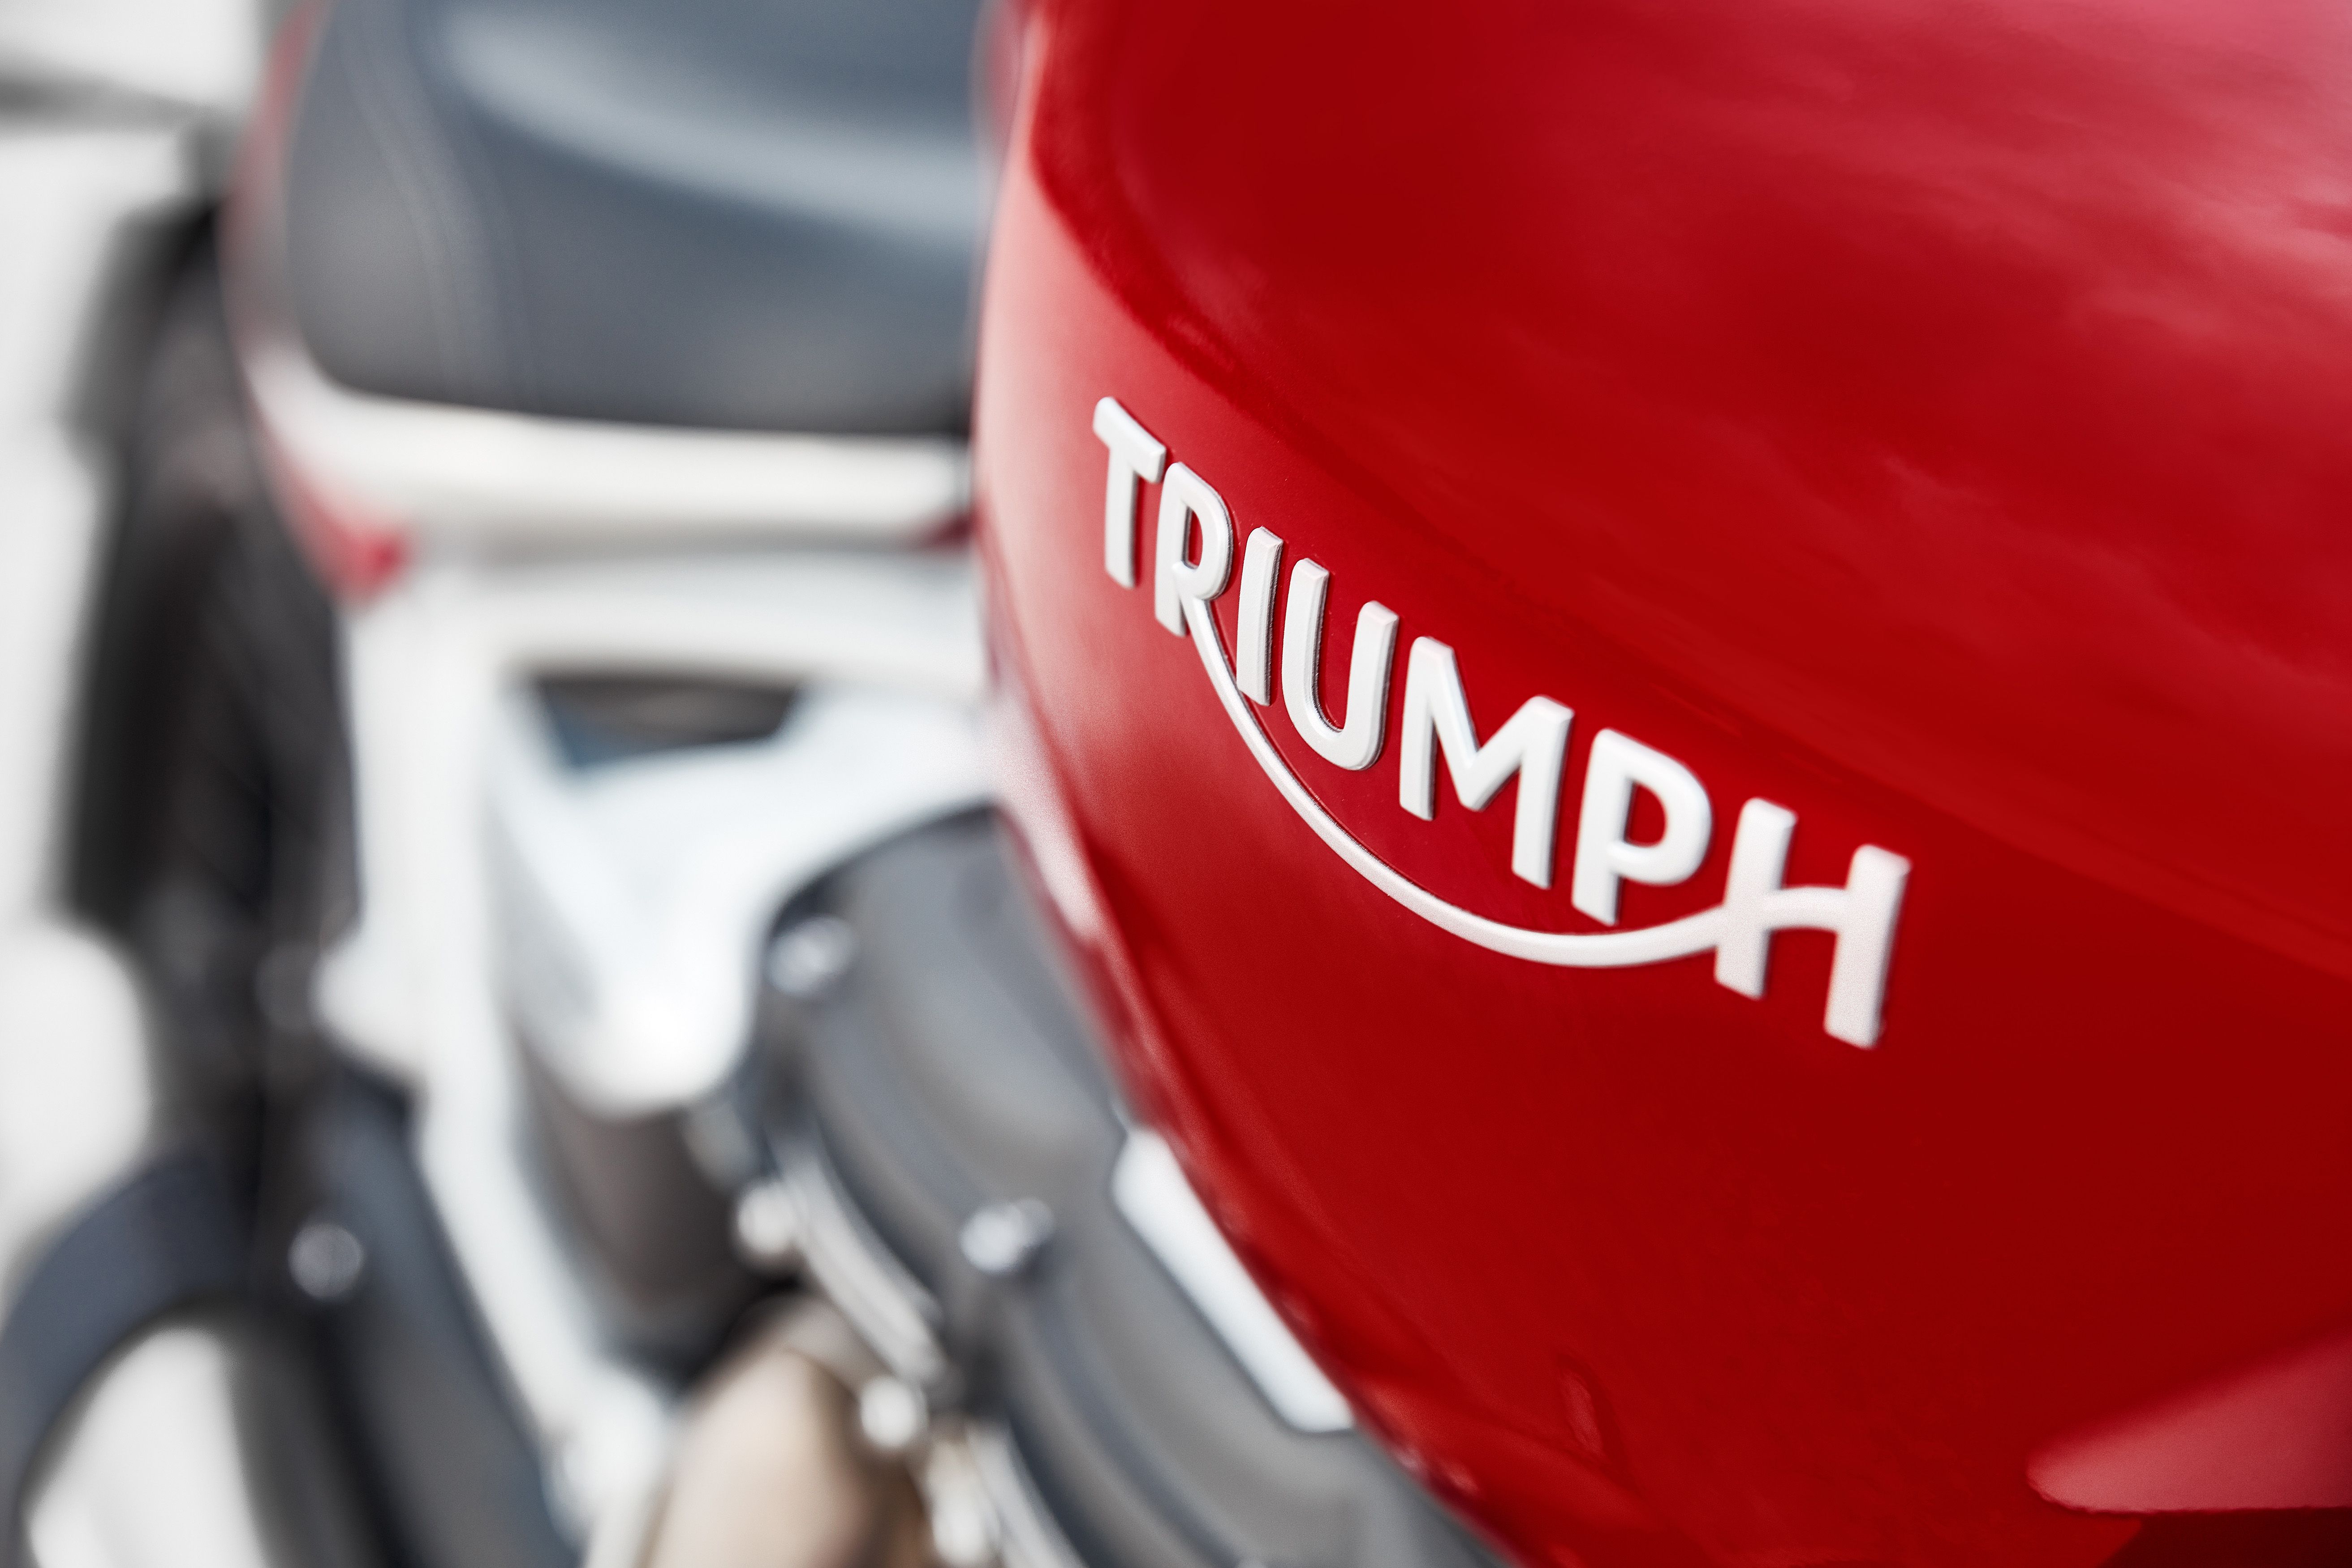 2019 Triumph Rocket 3 R / Rocket 3 GT